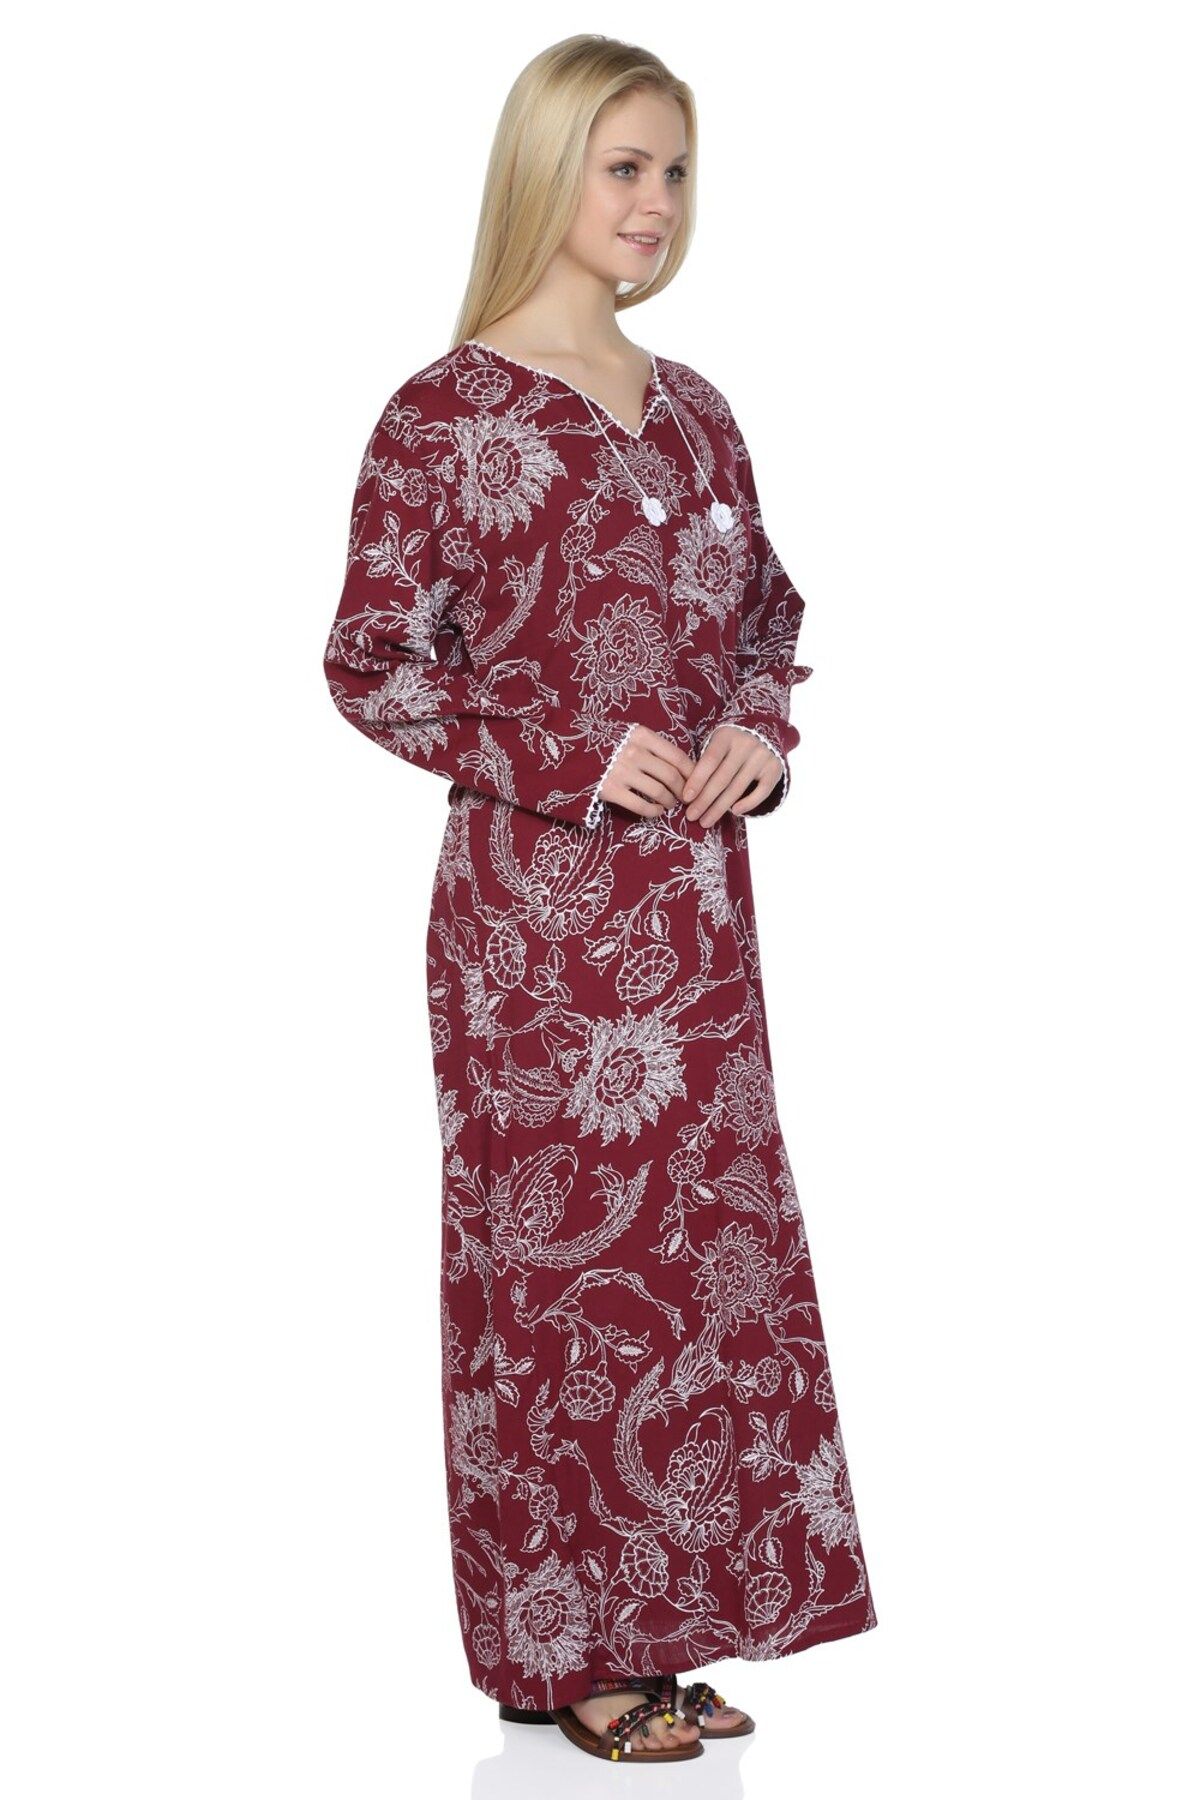 Eliş Şile Bezi آستین بلند سایز پلاس پارچه شیله چاپ لباس مدل Çinar Claret Red Brd